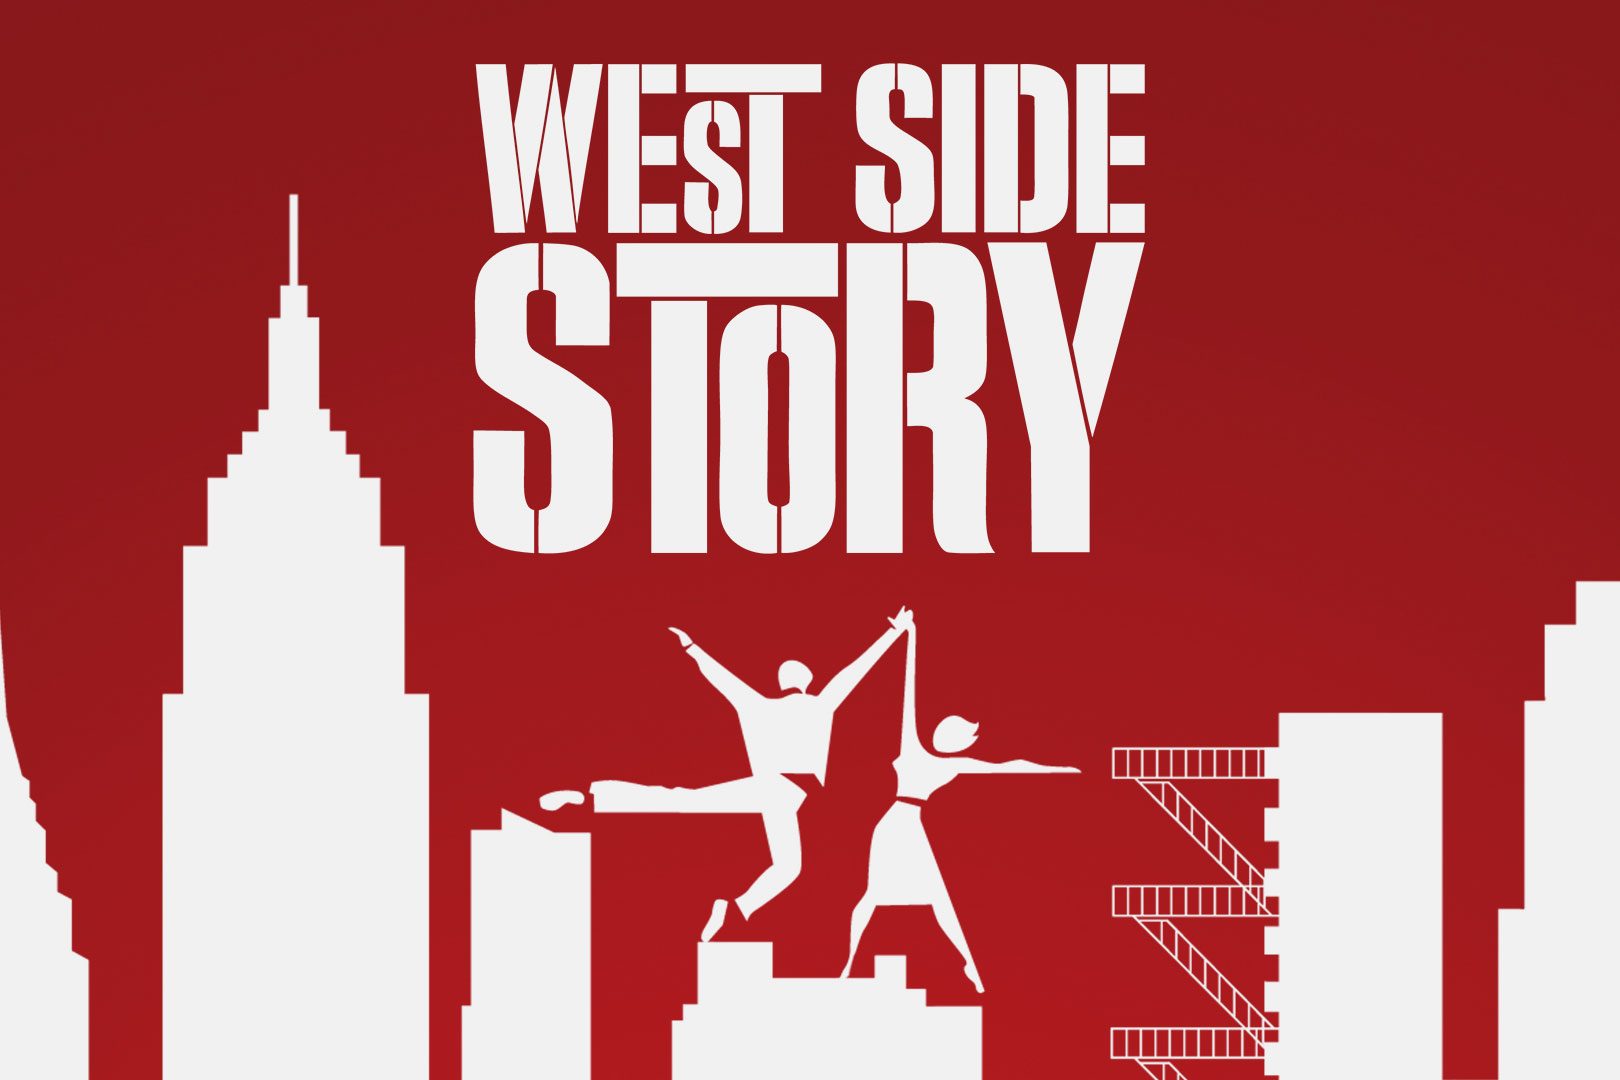 Rd West Side Story Movie Via Amzon.com